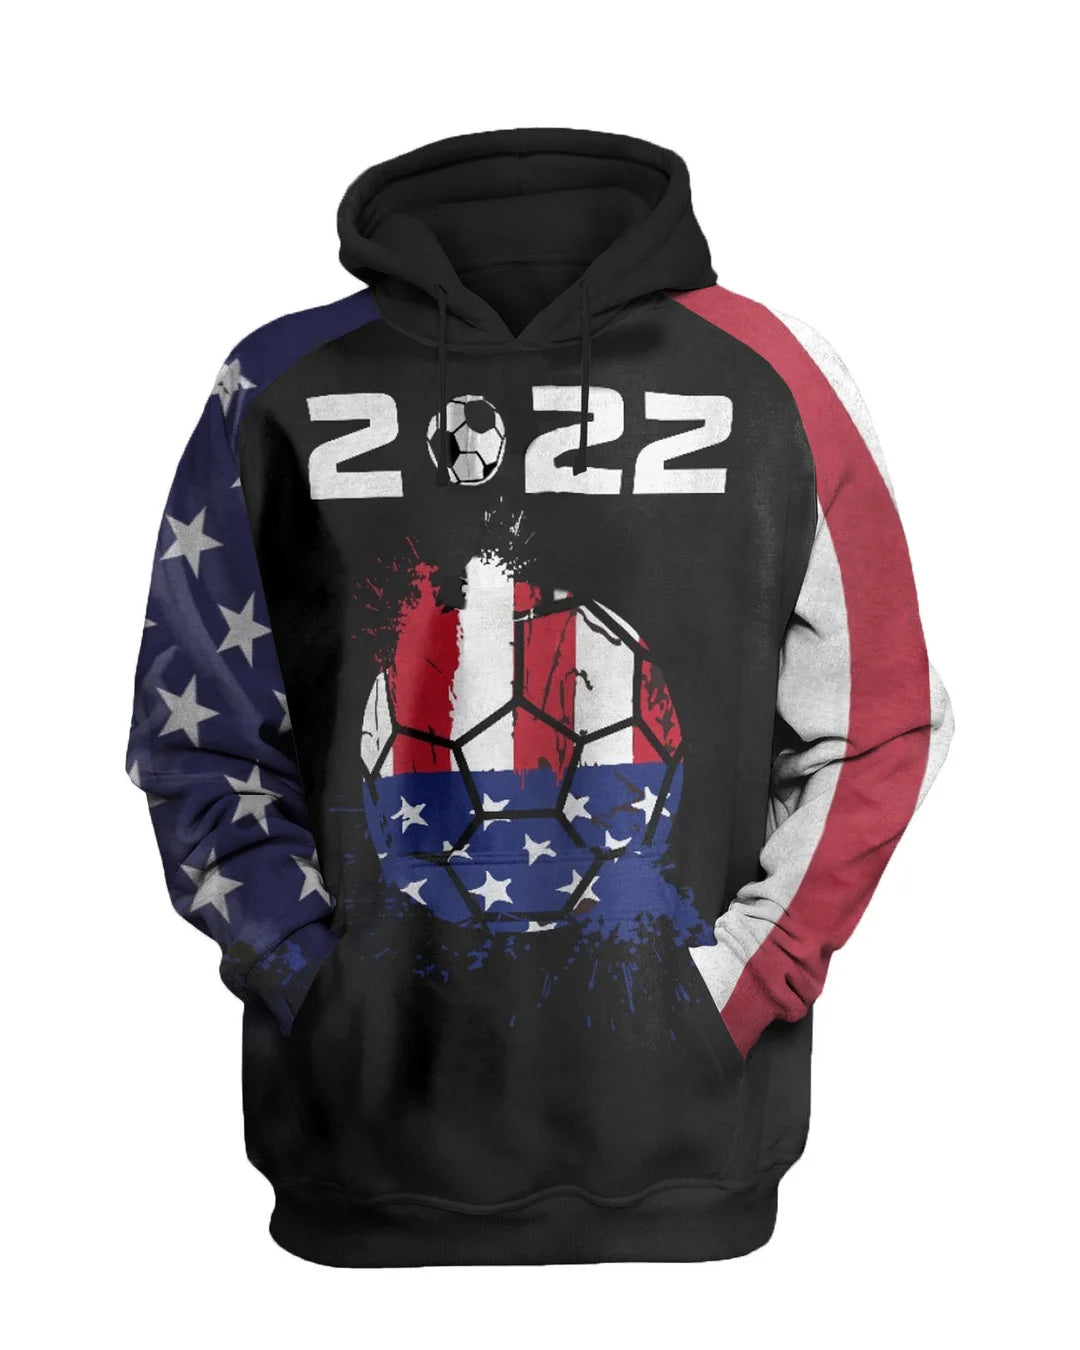 2022 America Printed Sweatshirt Set